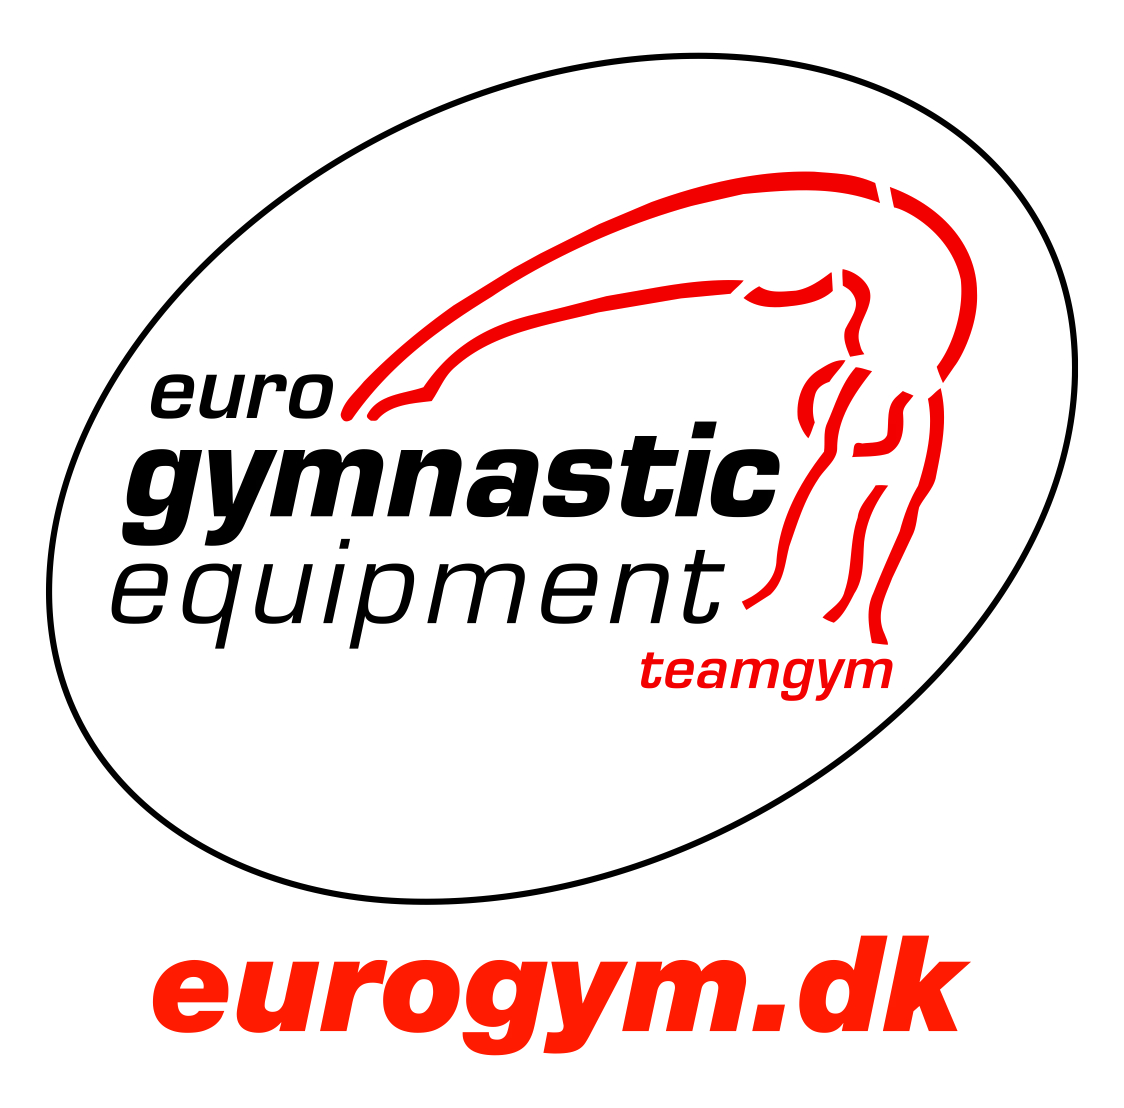 euro gymnastic equipment